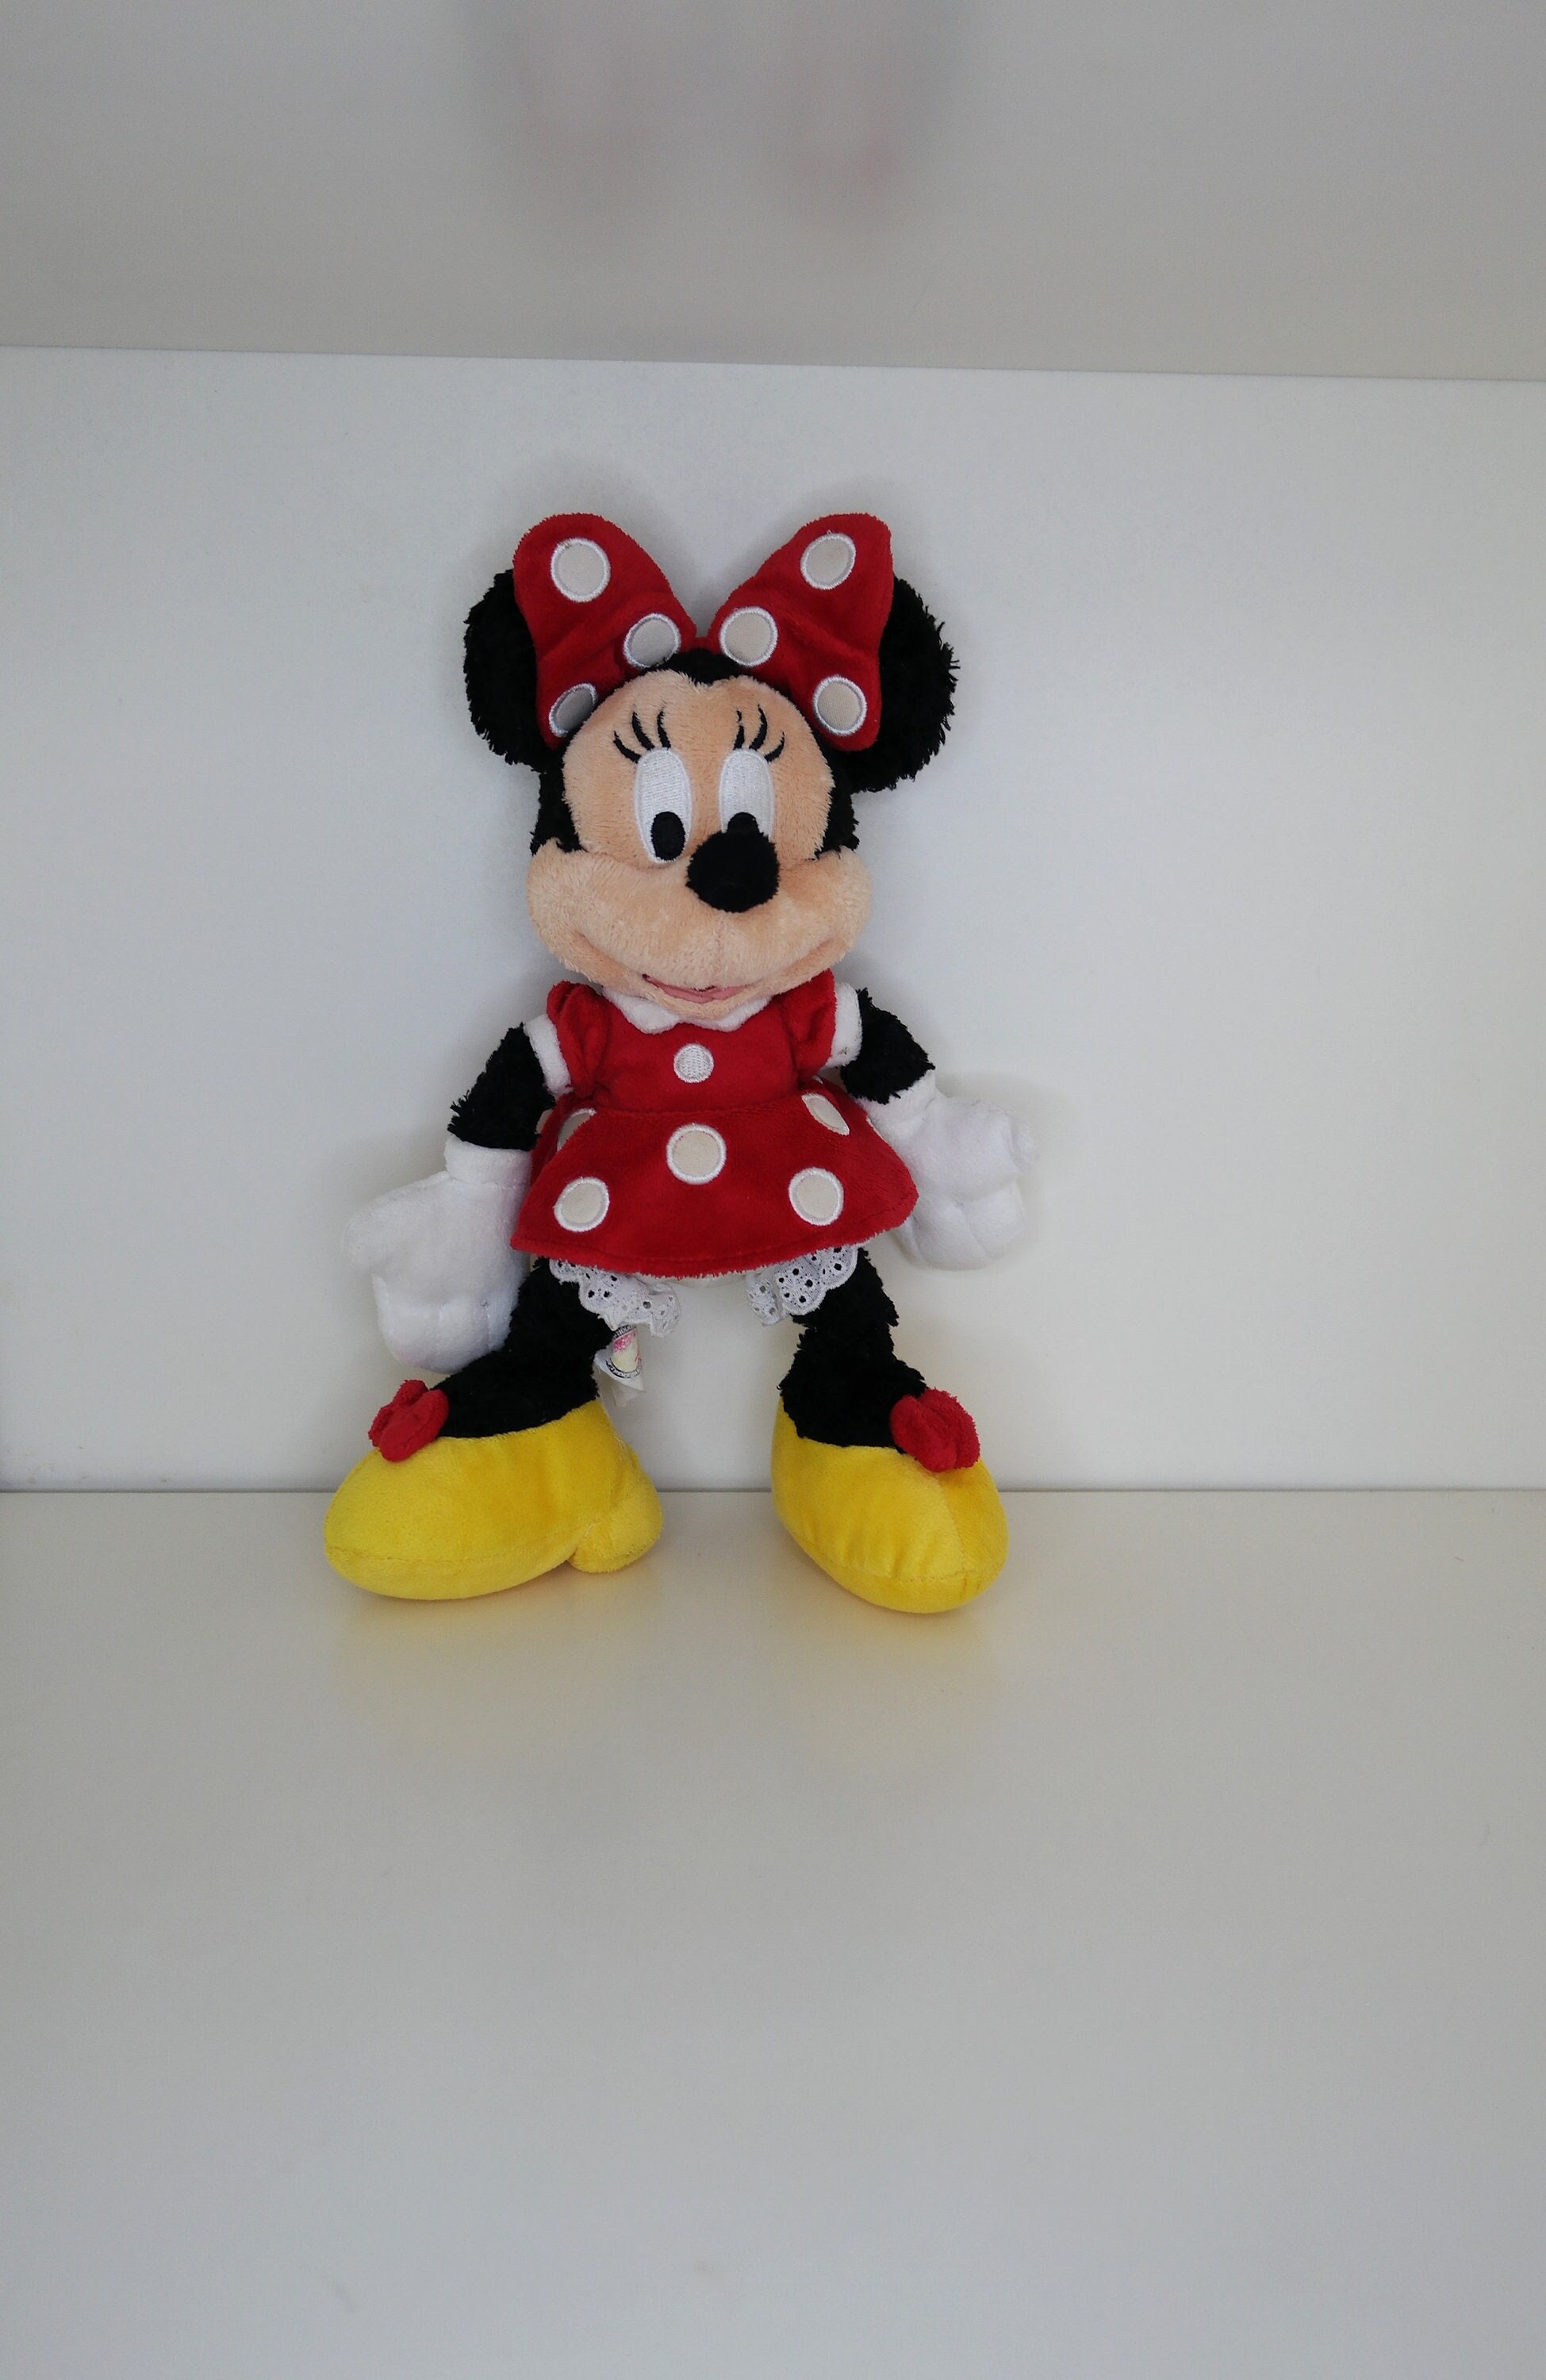 Good Smile Disney Minnie Mouse (Polka Dot Dress Version) Nendoroid Action  Figure, Multicolor